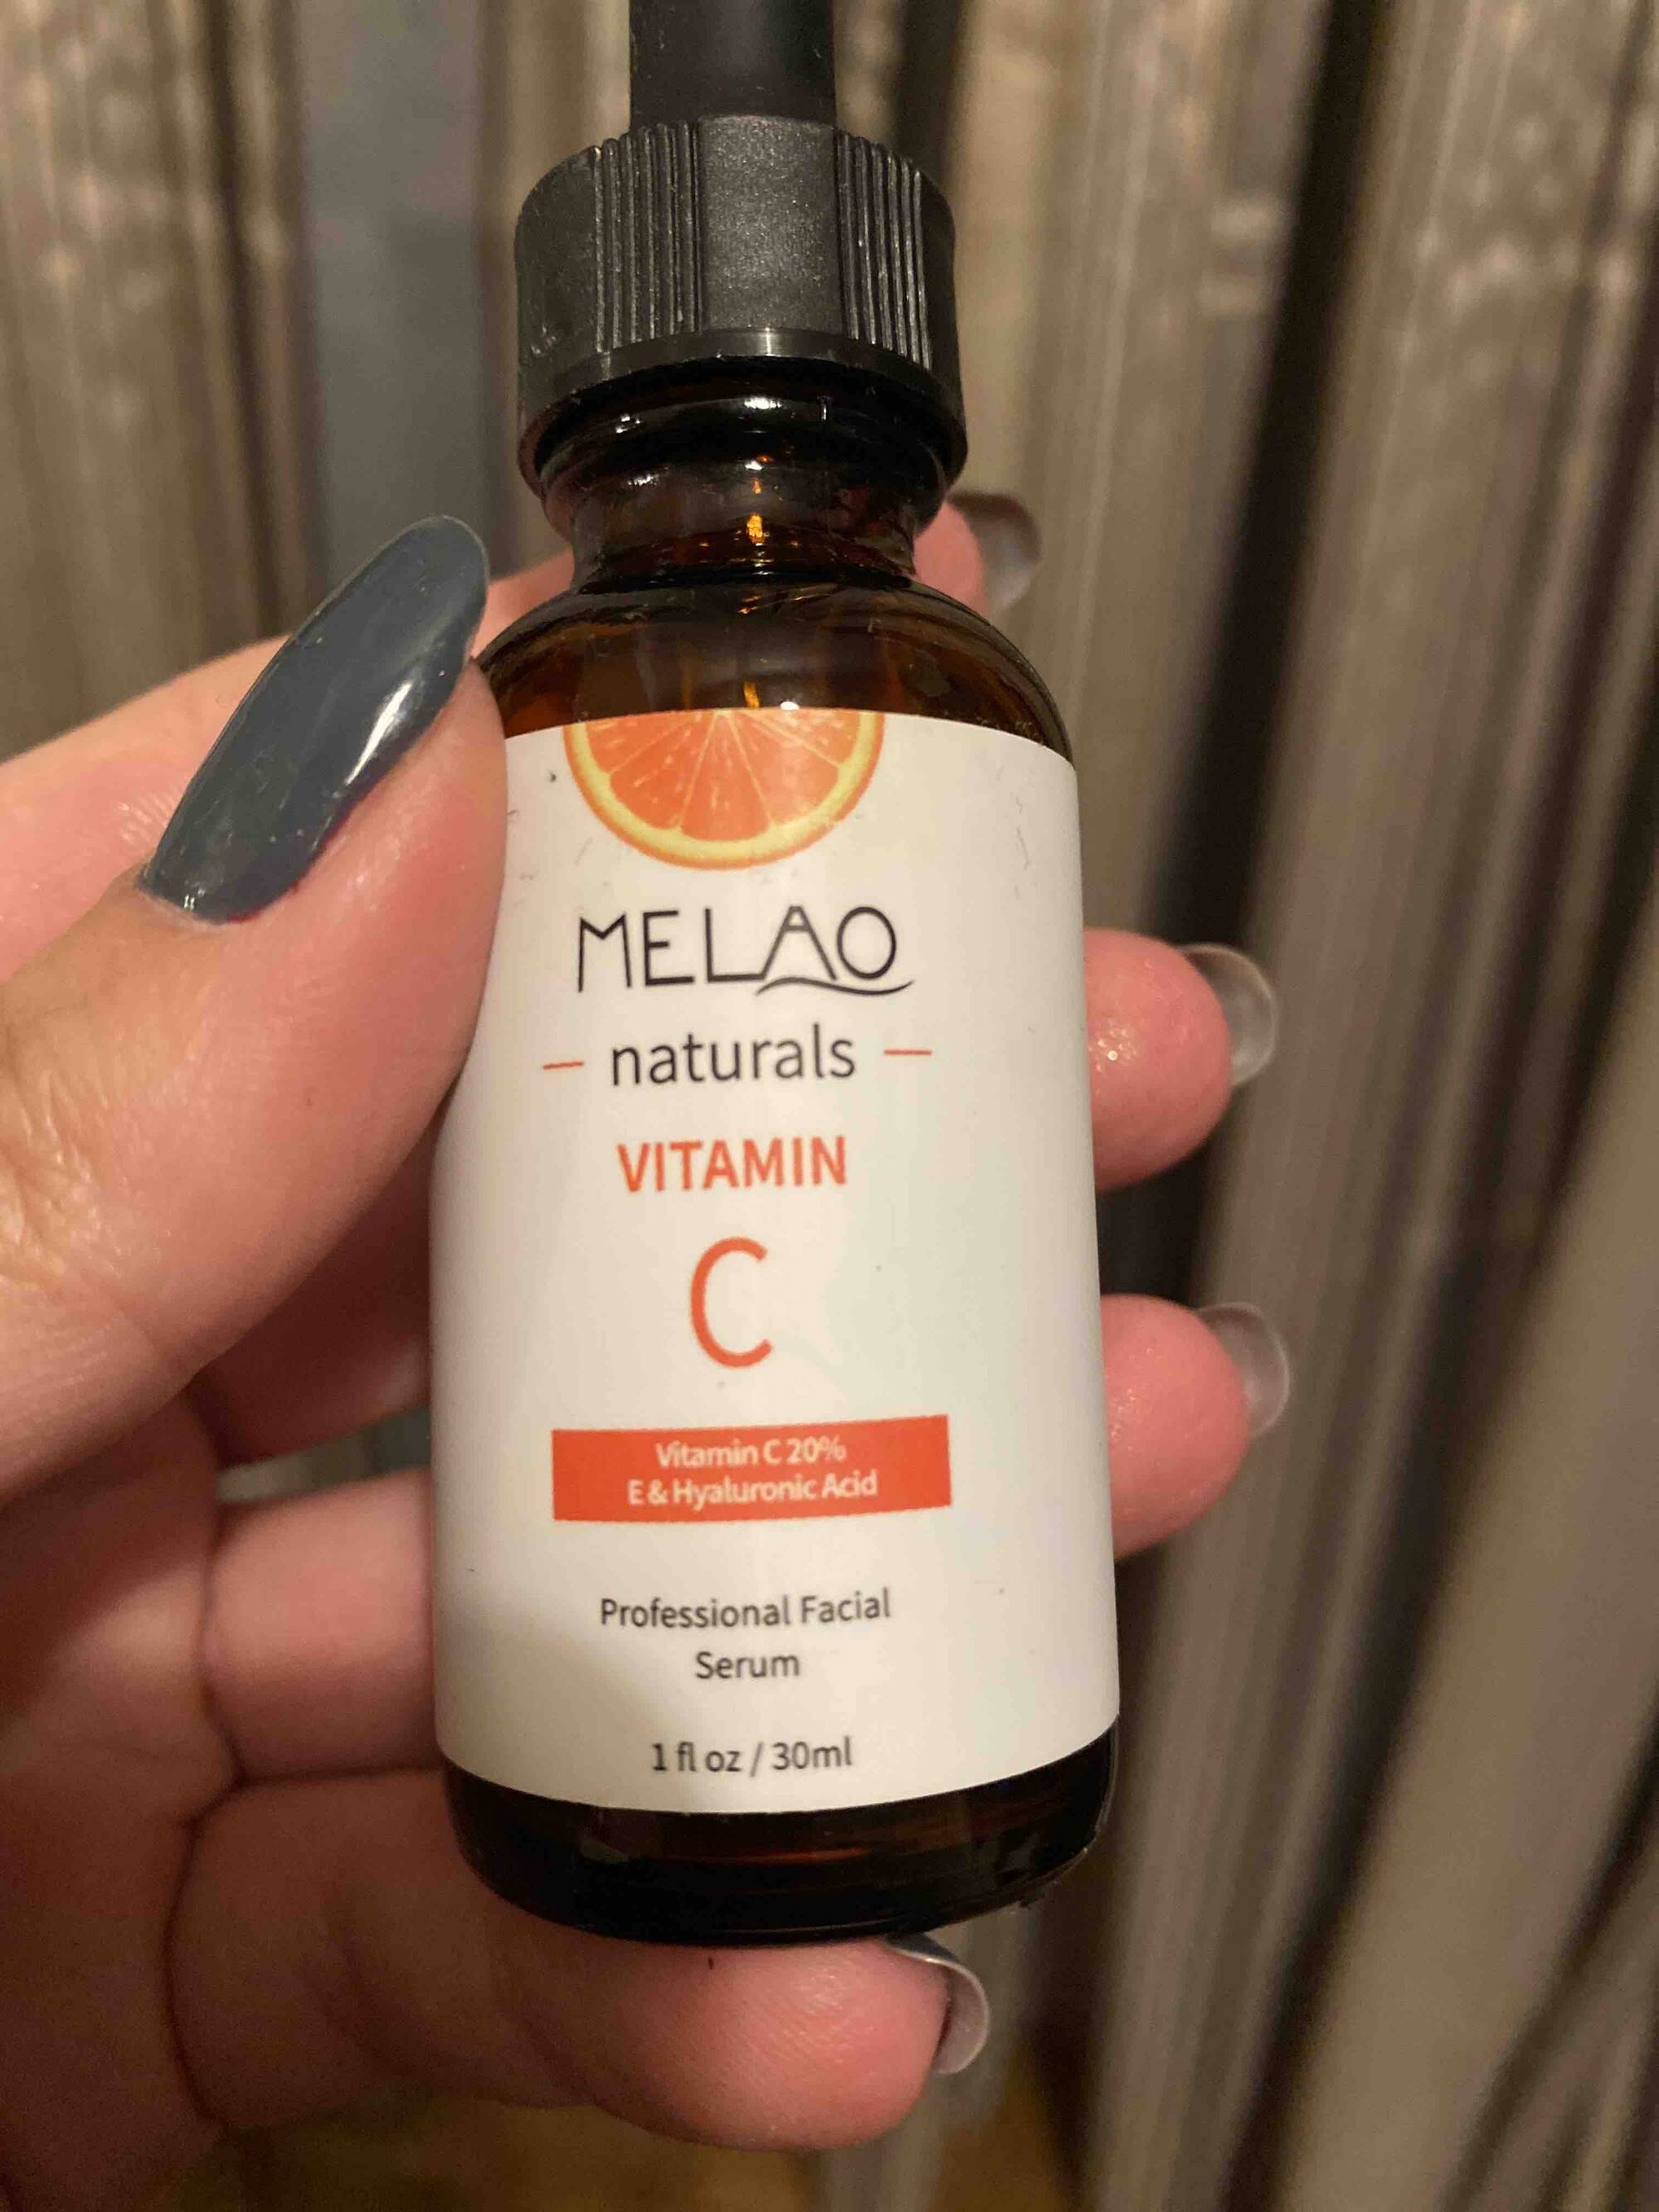 MELAO - Vitamin C - Professional facial serum 